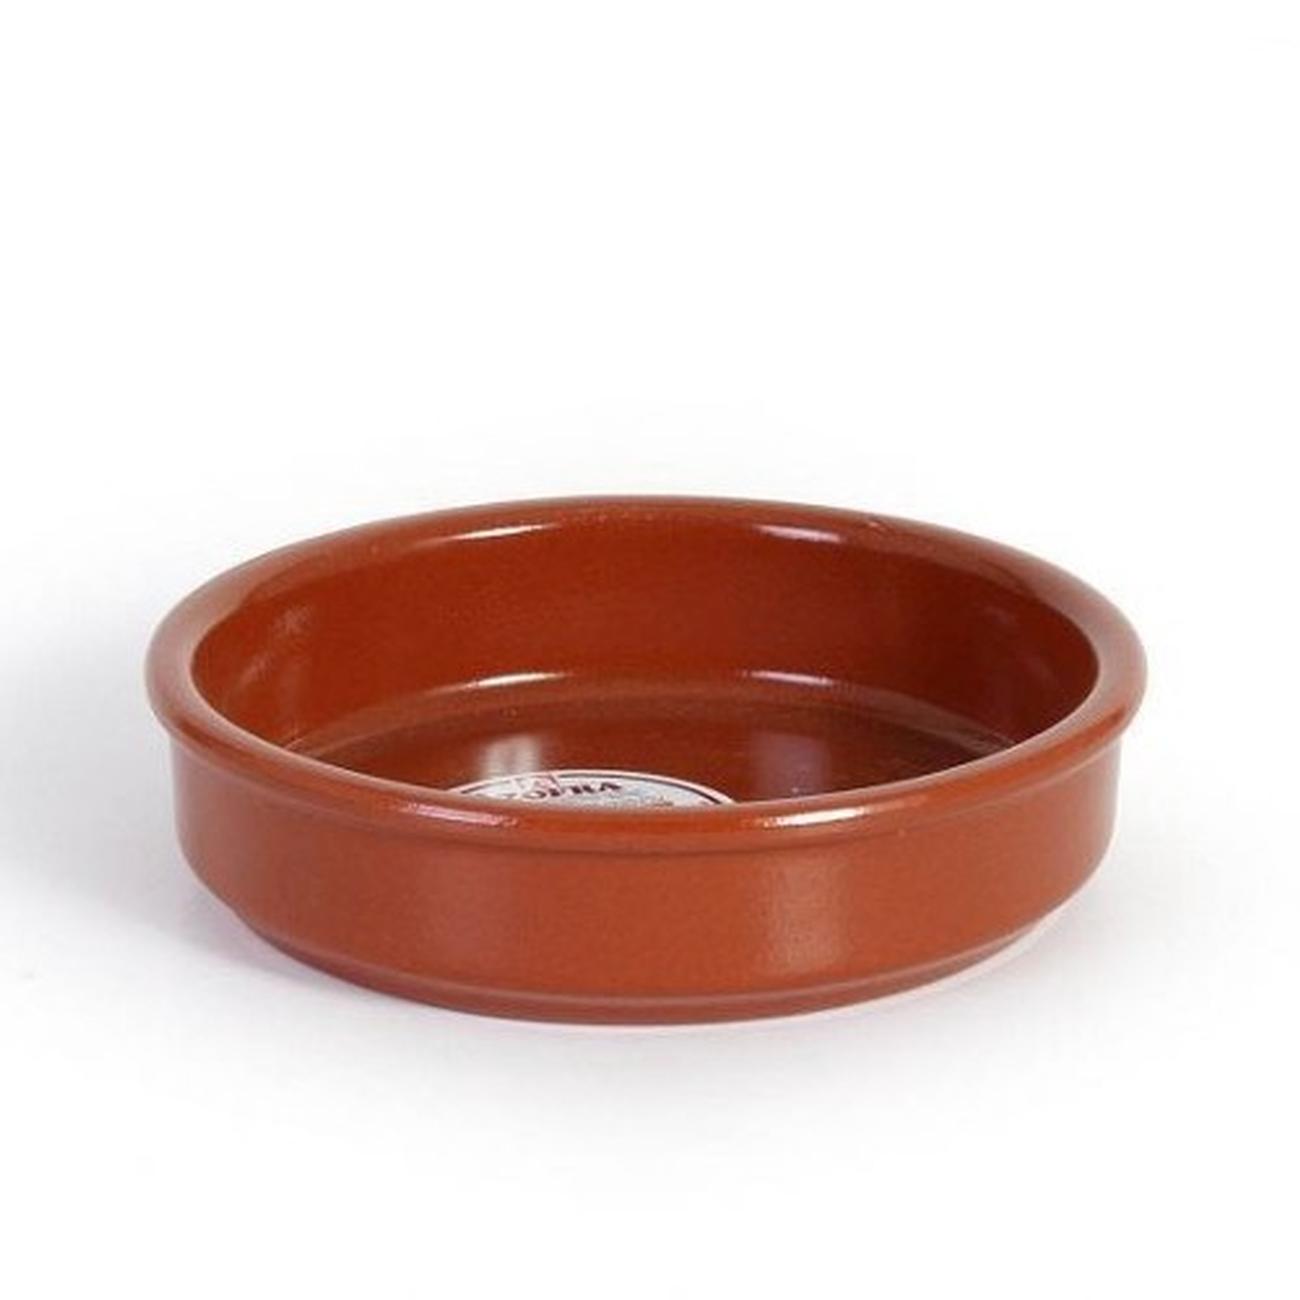 azofra-terracotta-cazuela-tapas-dish-14cm - Azofra Terracotta Tapas Dish 14cm